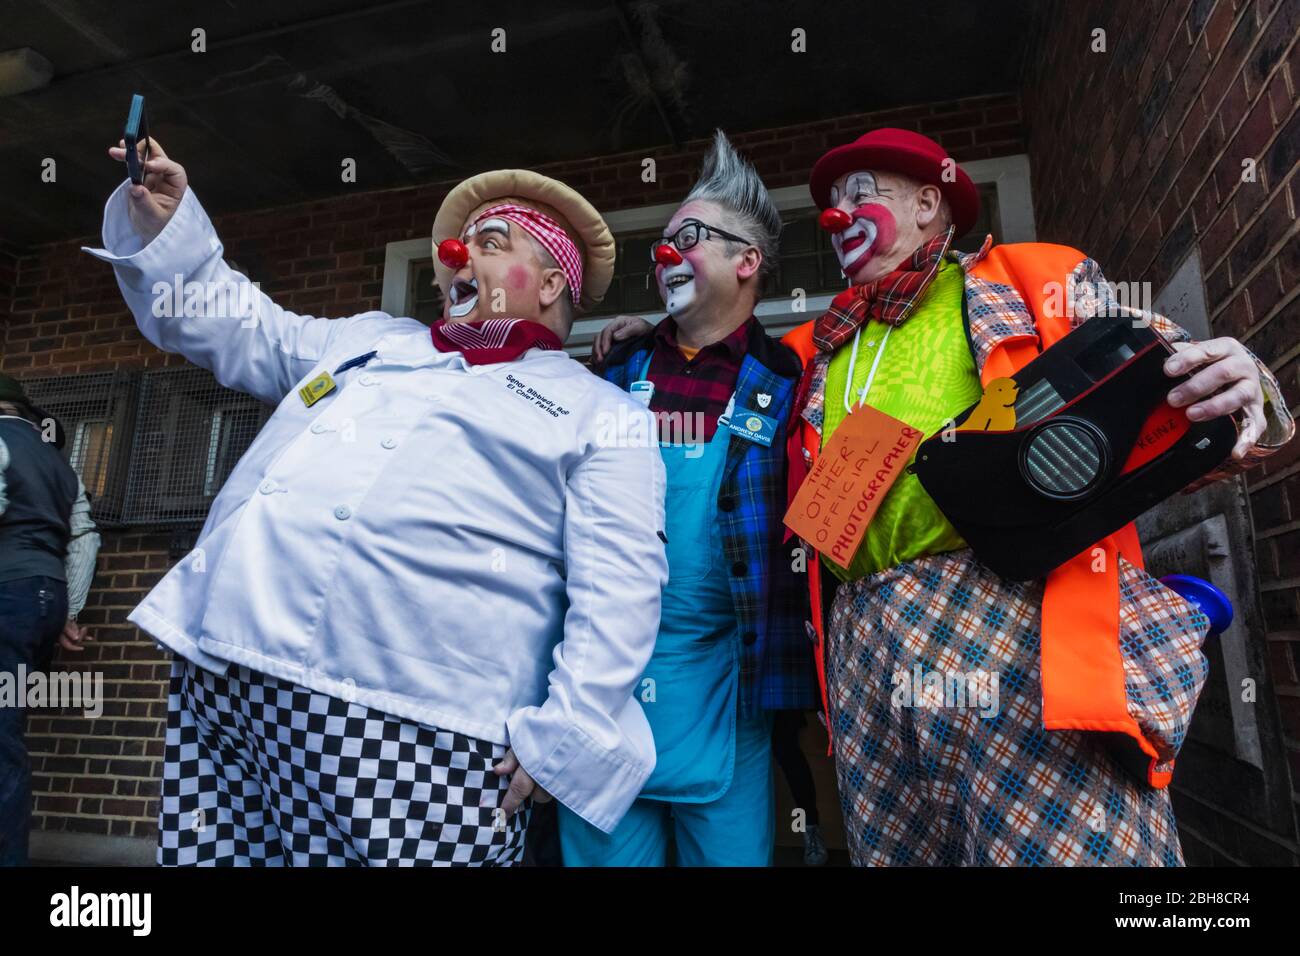 England, London, The Annual Grimaldi Clowns Church Service at All Saints Church, Haggerston, Group of Clowns Taking Selfie Photos Stock Photo